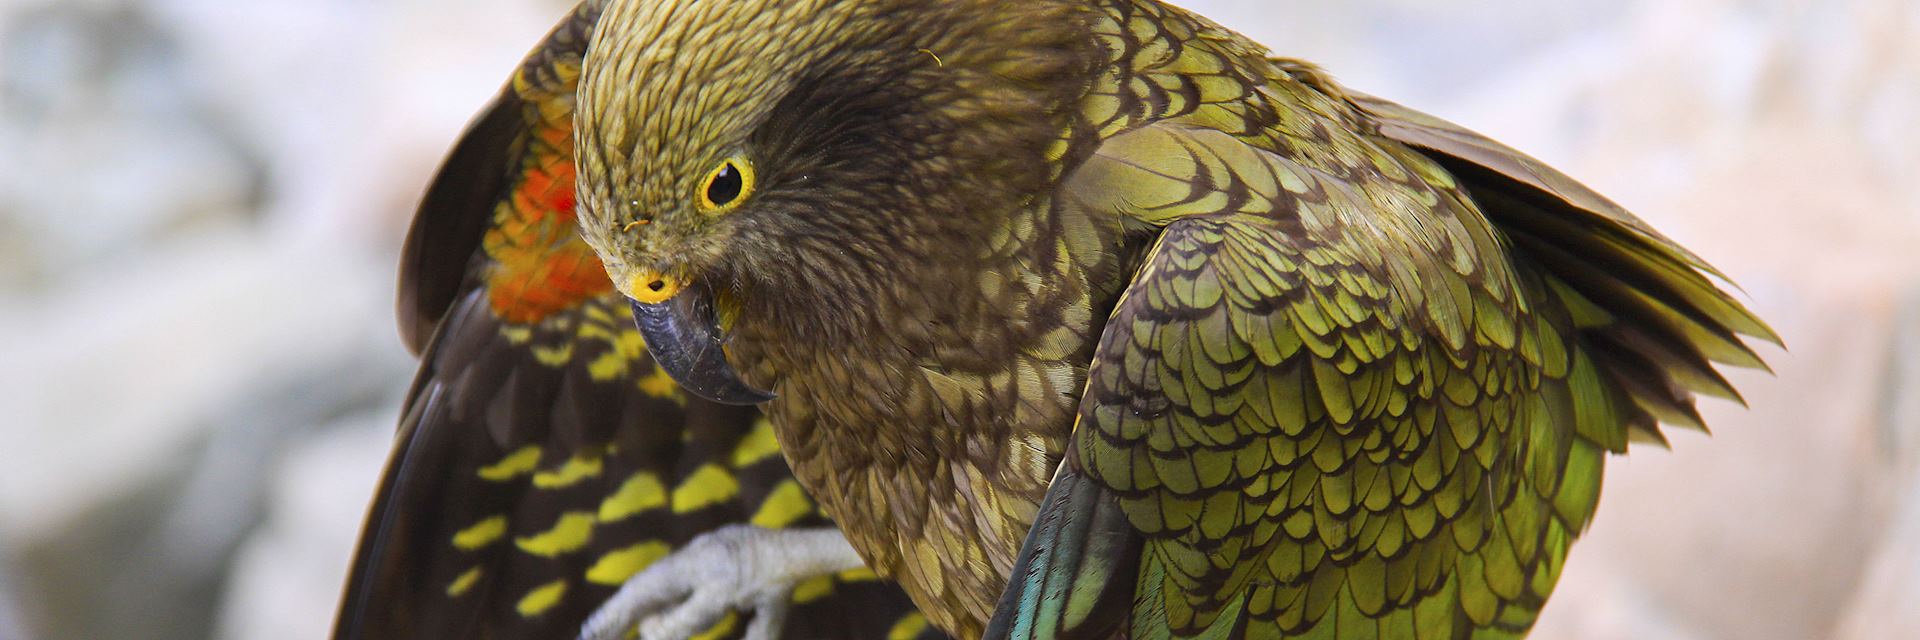 Kea Bird, Aoraki National Park